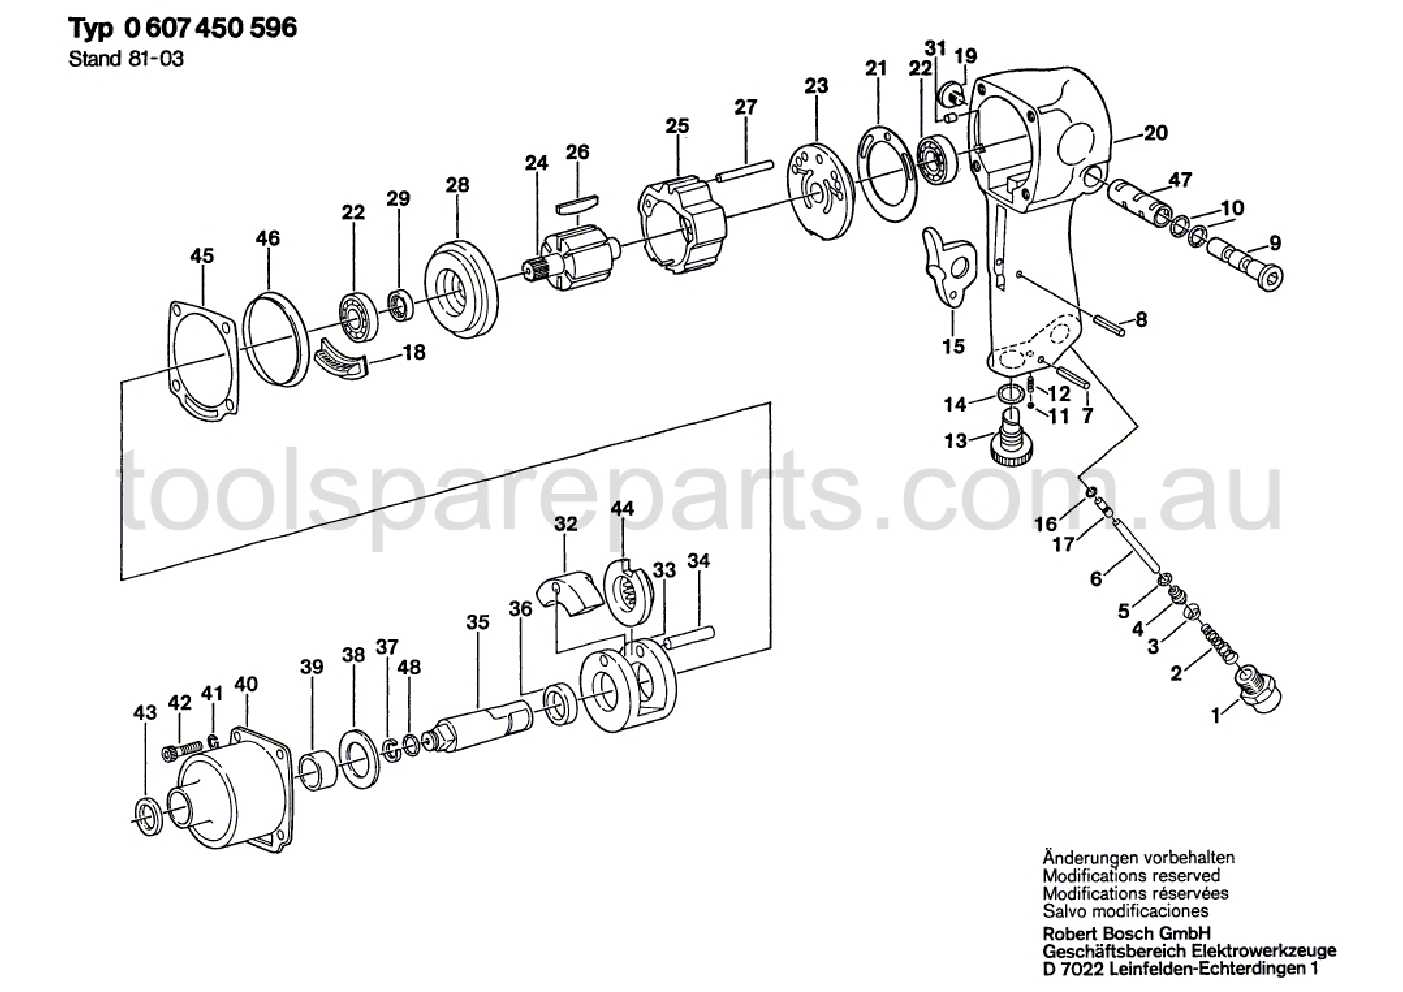 Bosch ---- 0607450596  Diagram 1